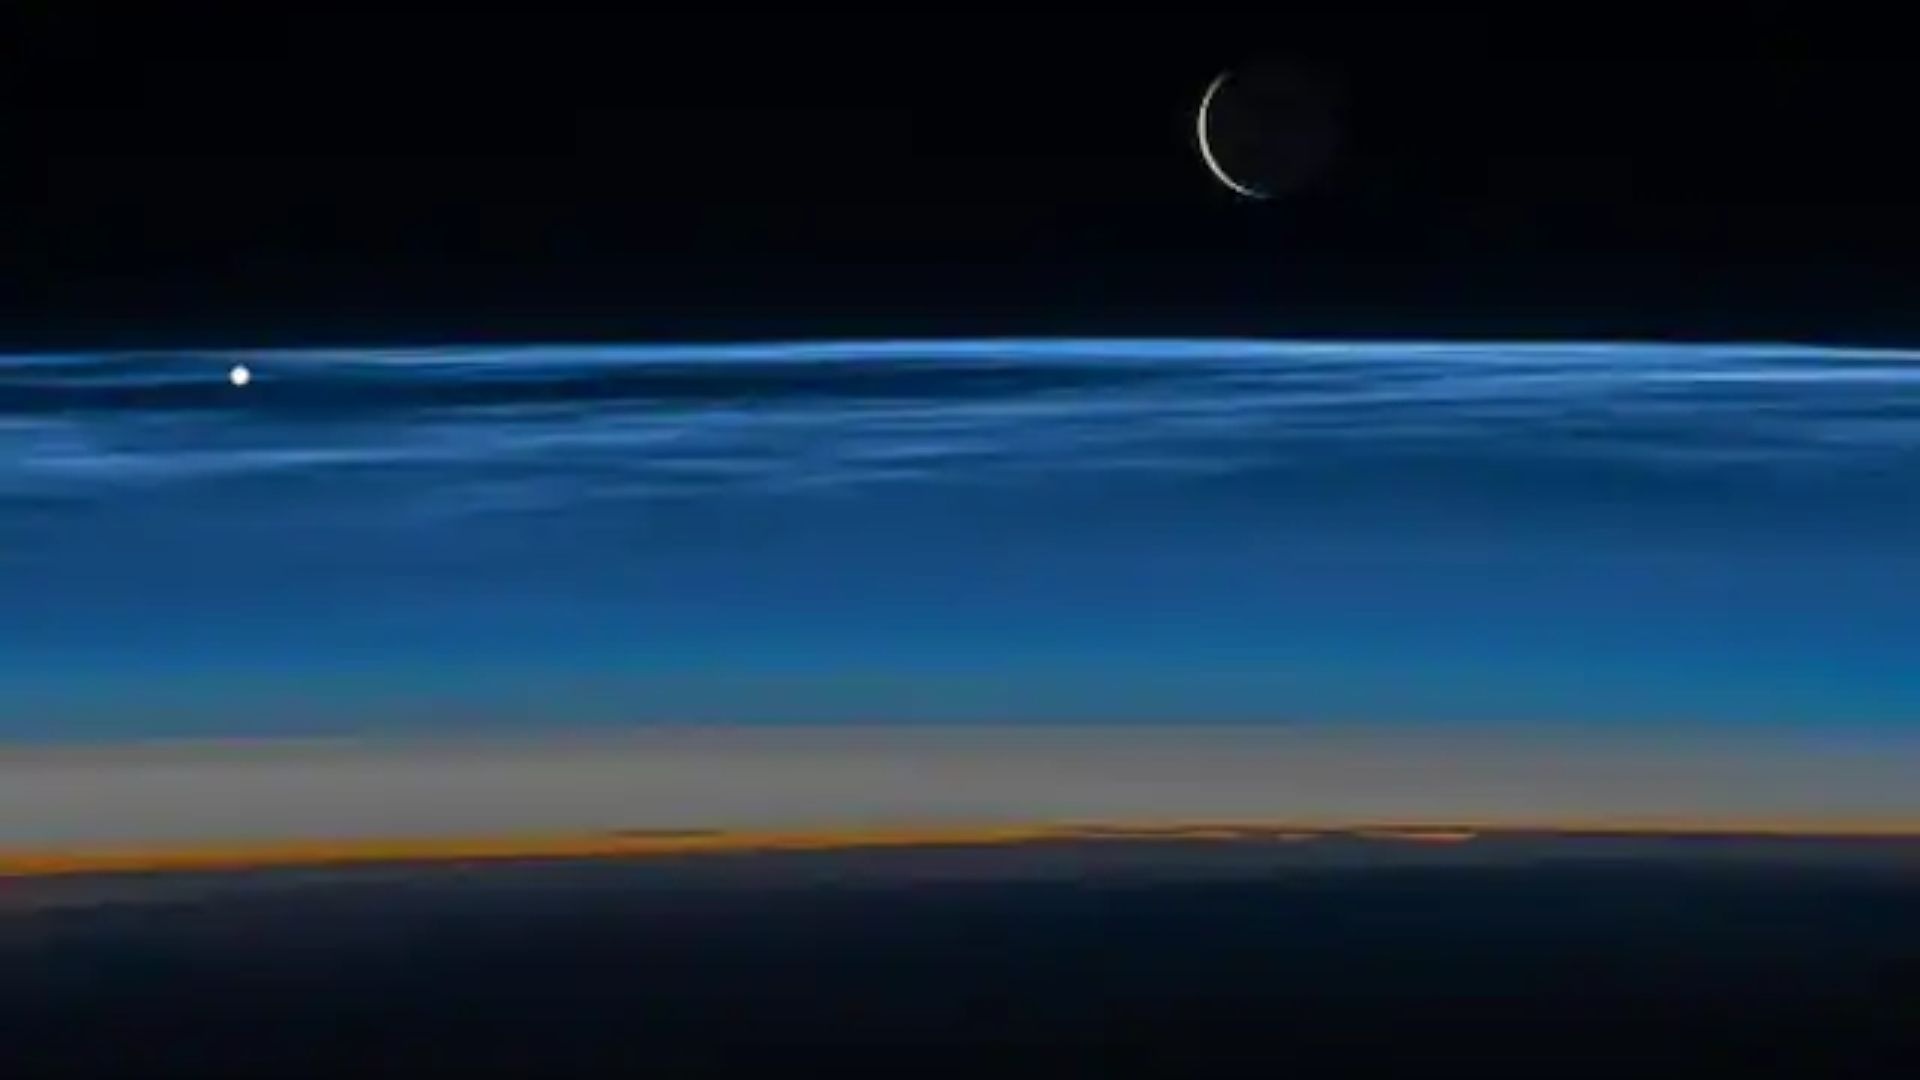 NASA Shares Stunning Moonrise Image Captured From International Space Station